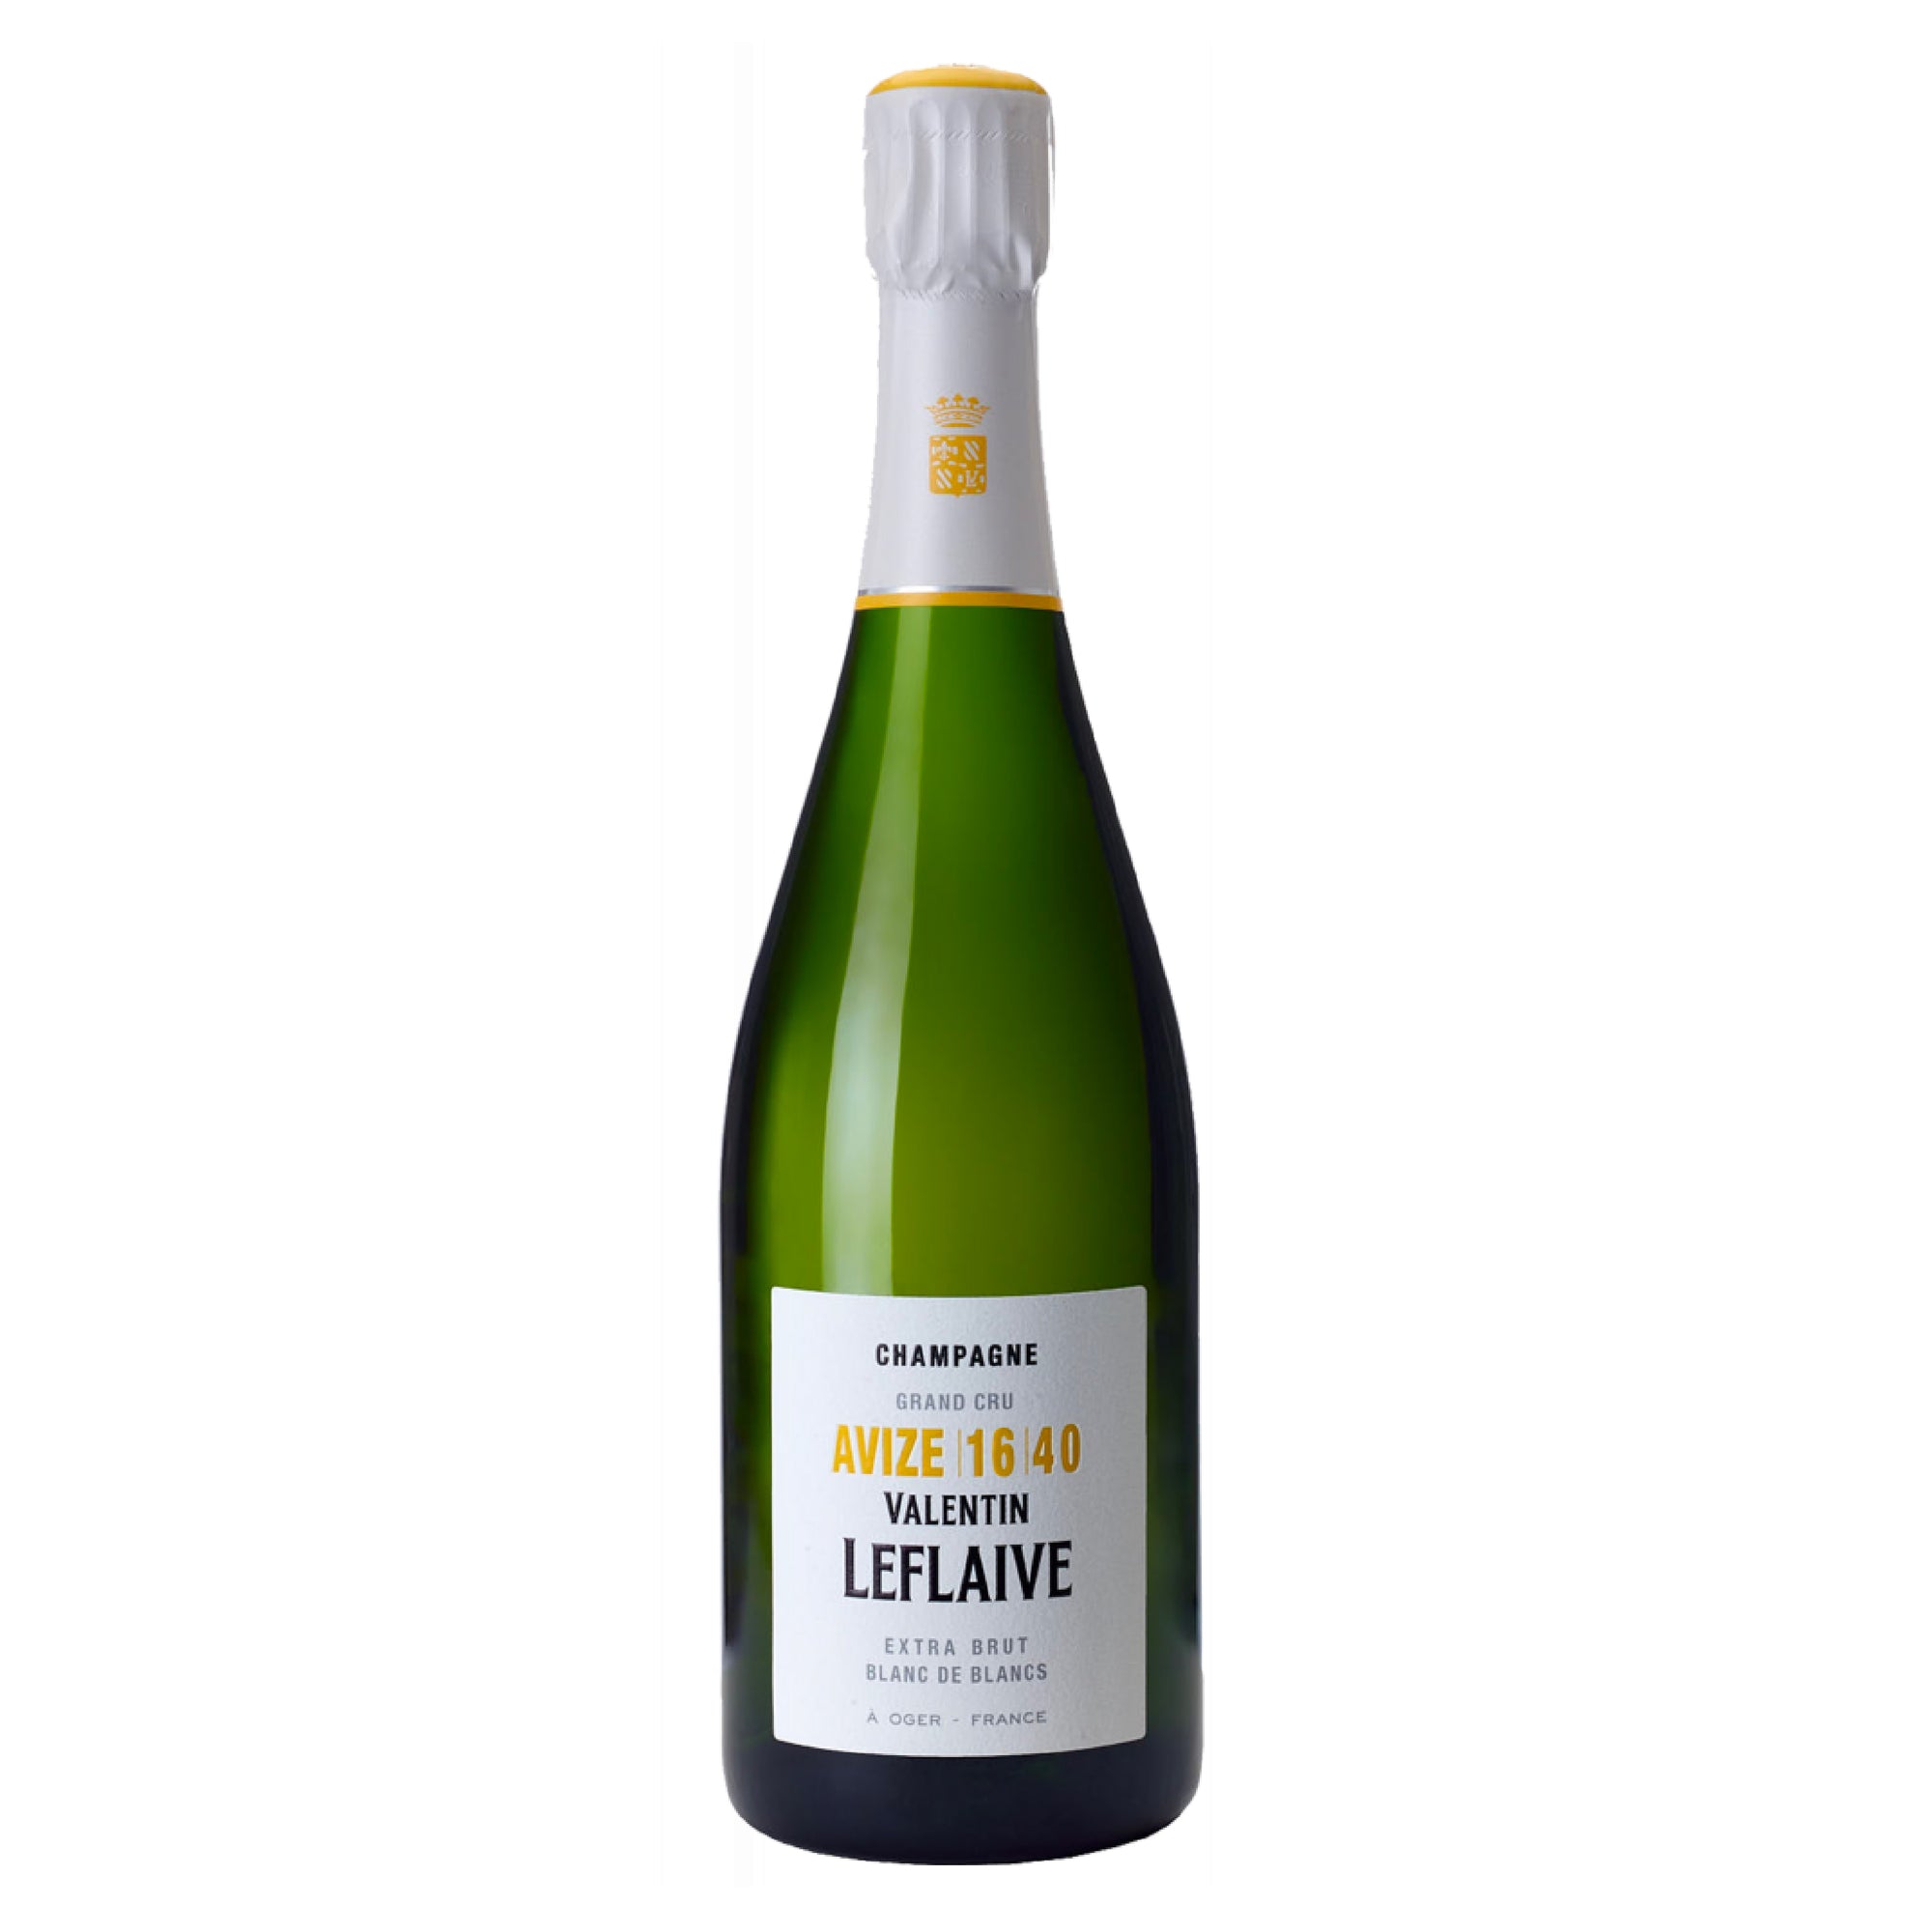 VALENTIN LEFLAIVE Champagne Grand Cru Extra Brut "Avize 16 40" Blanc de Blancs NV